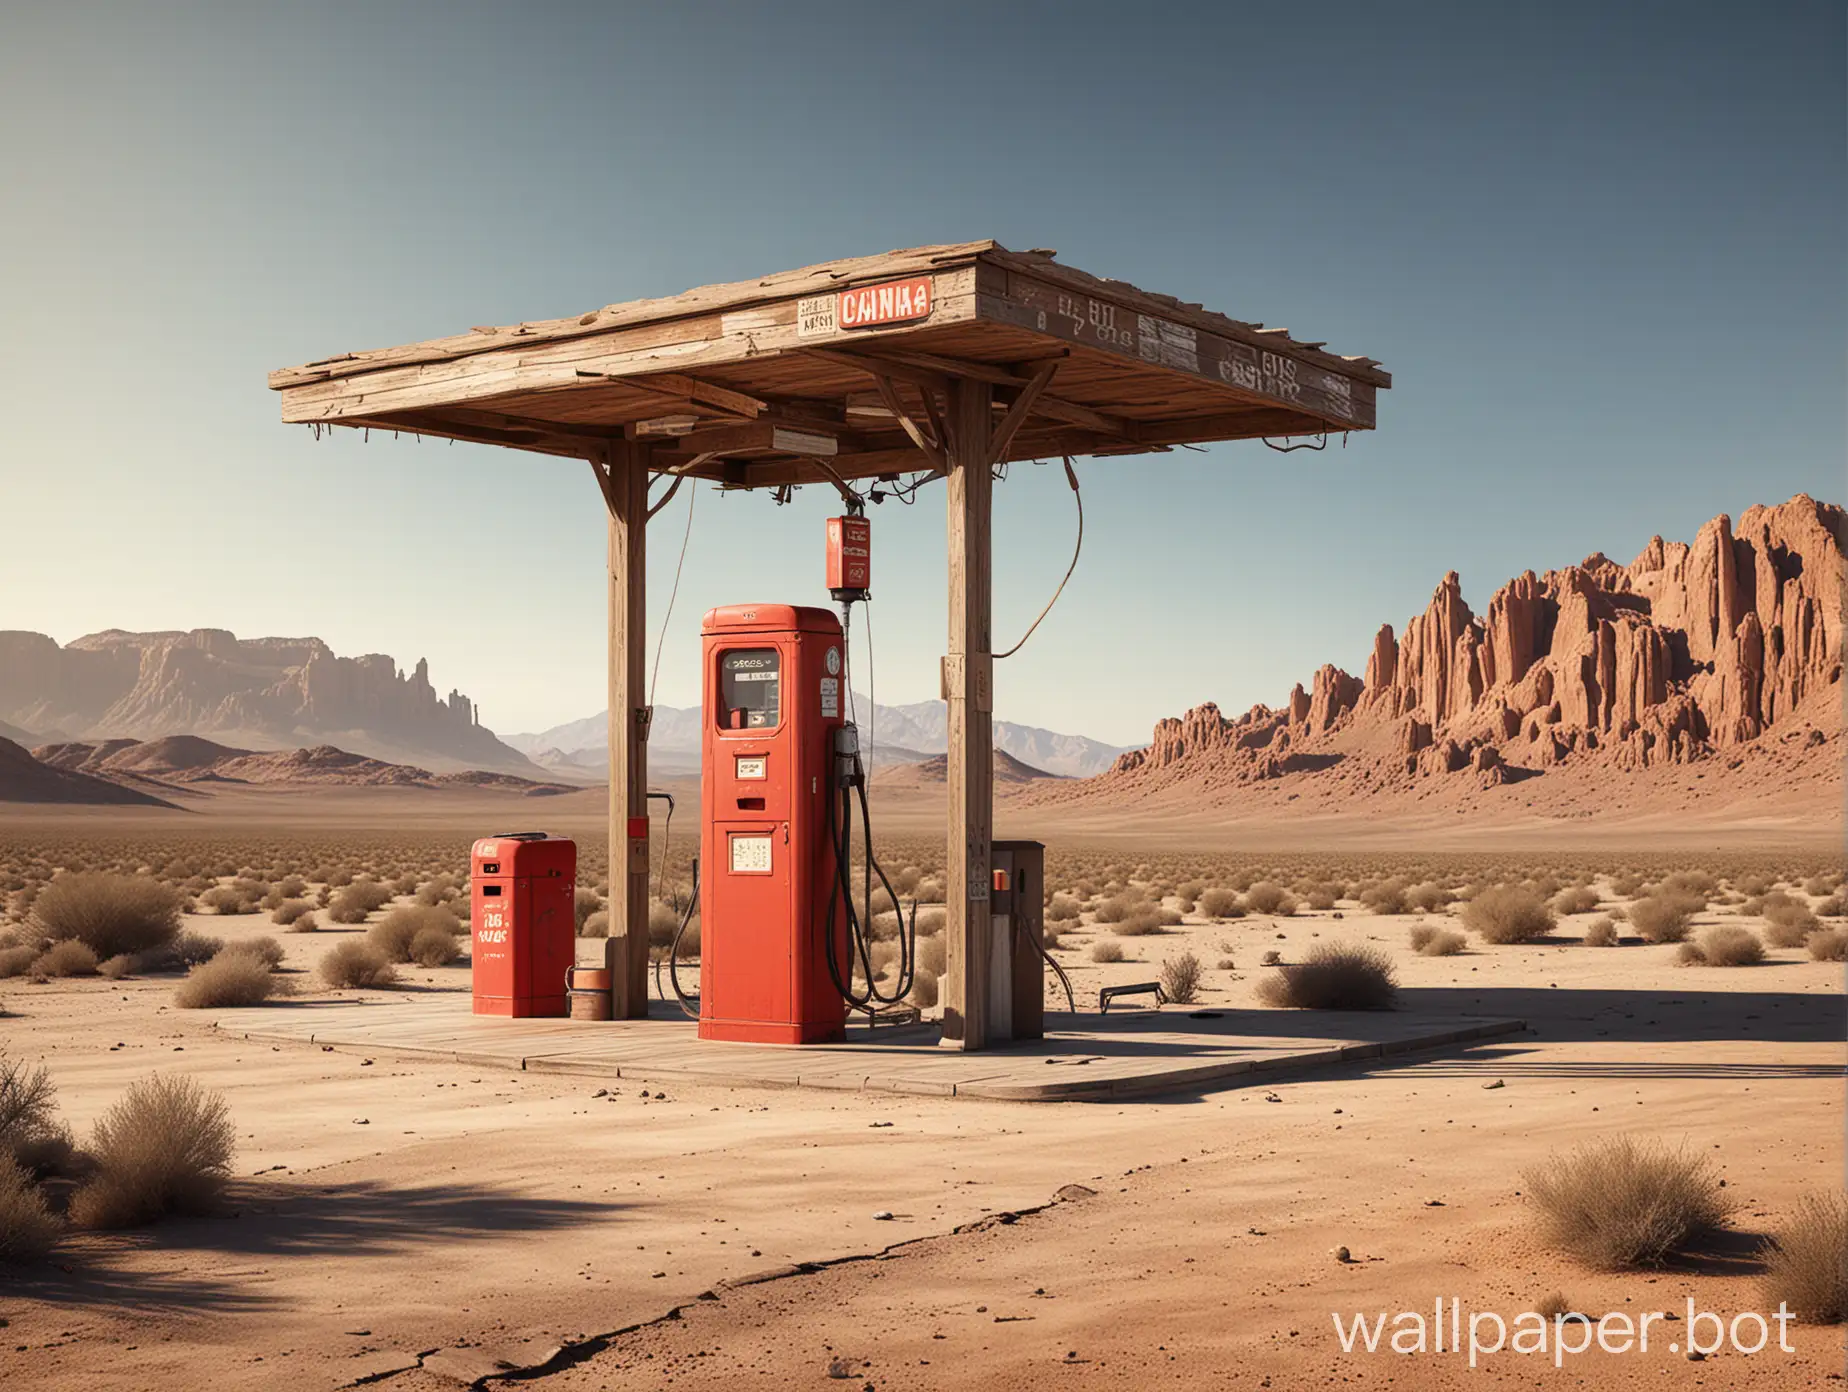 Rustic-Red-Gas-Pump-at-Desert-Oasis-Vintage-Gas-Station-3D-Render